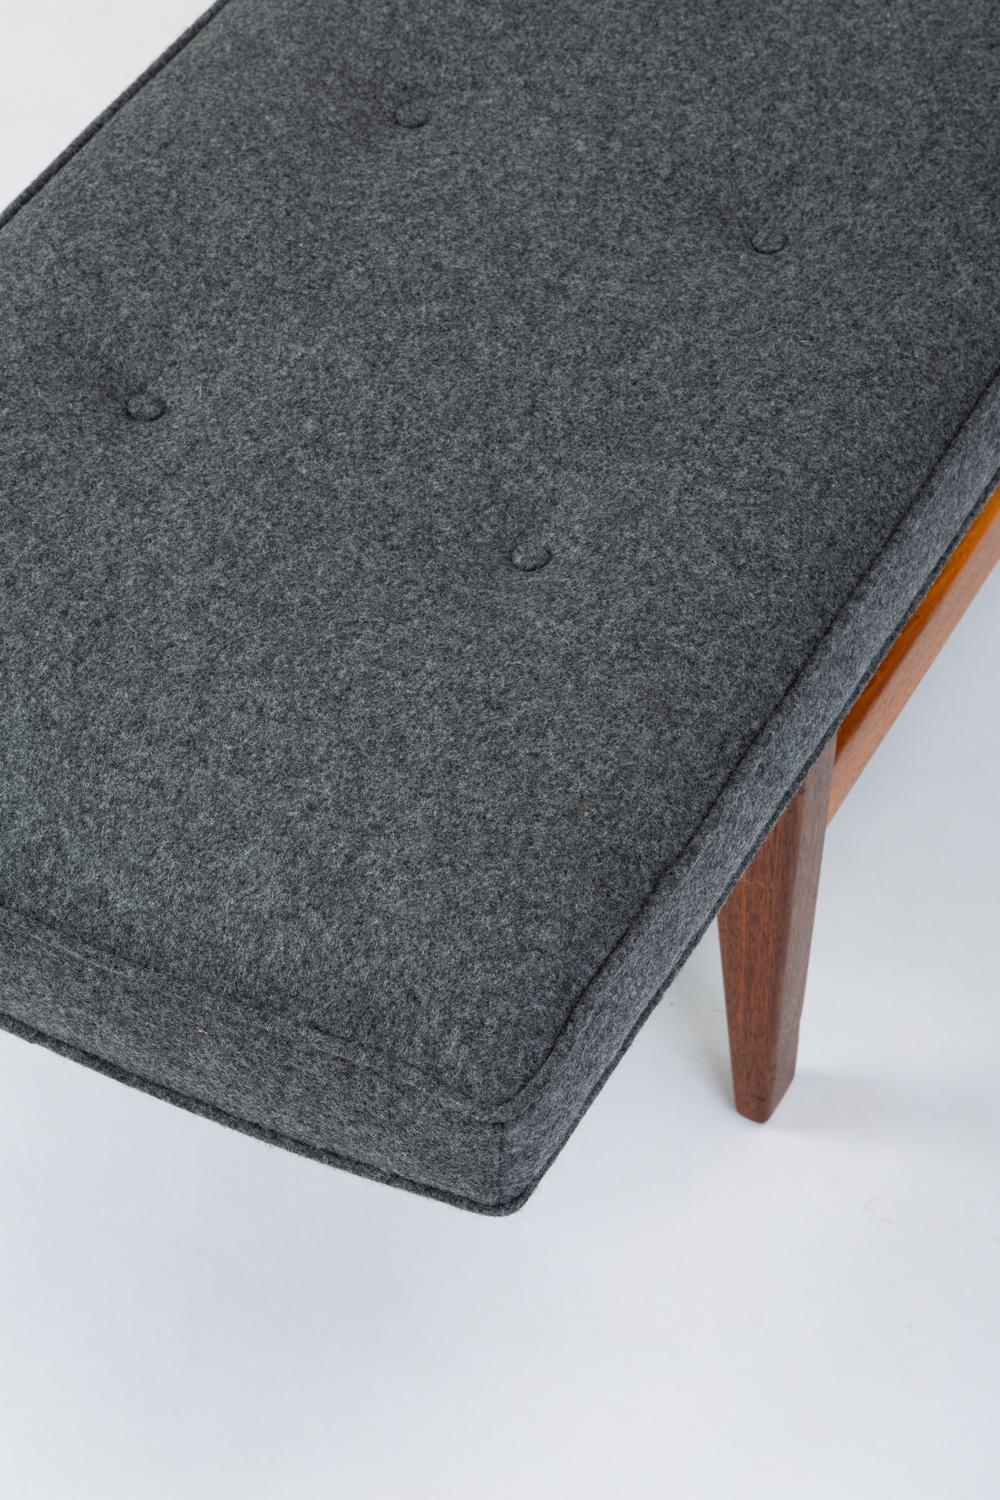 Long Upholstered Bench by Jens Risom 1